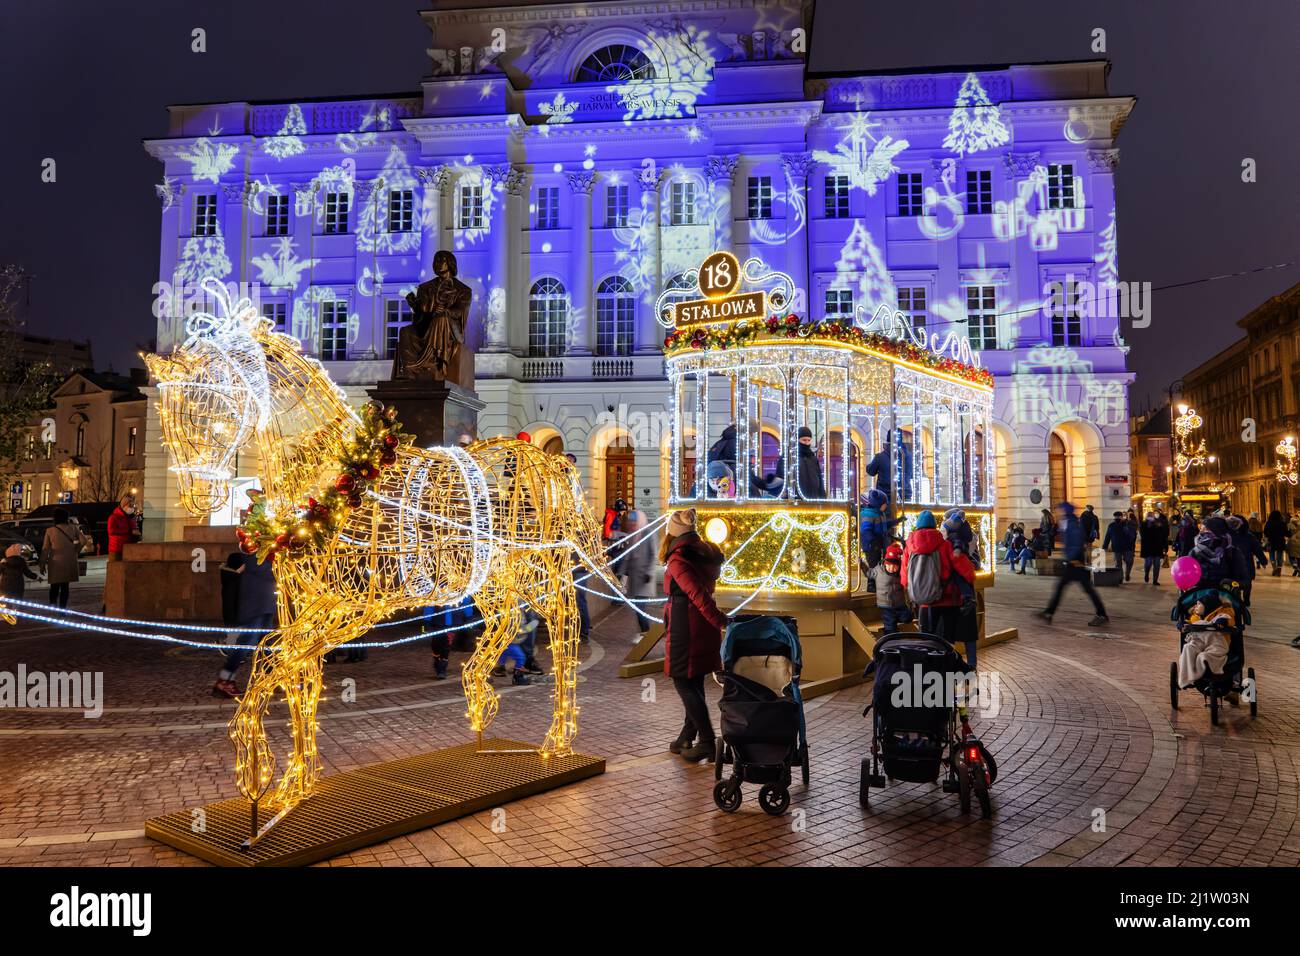 Warsaw, Poland - December 12, 2020: People enjoy horse and vintage tram holiday illumination at Staszic Palace and Nicolaus Copernicus monument at nig Stock Photo